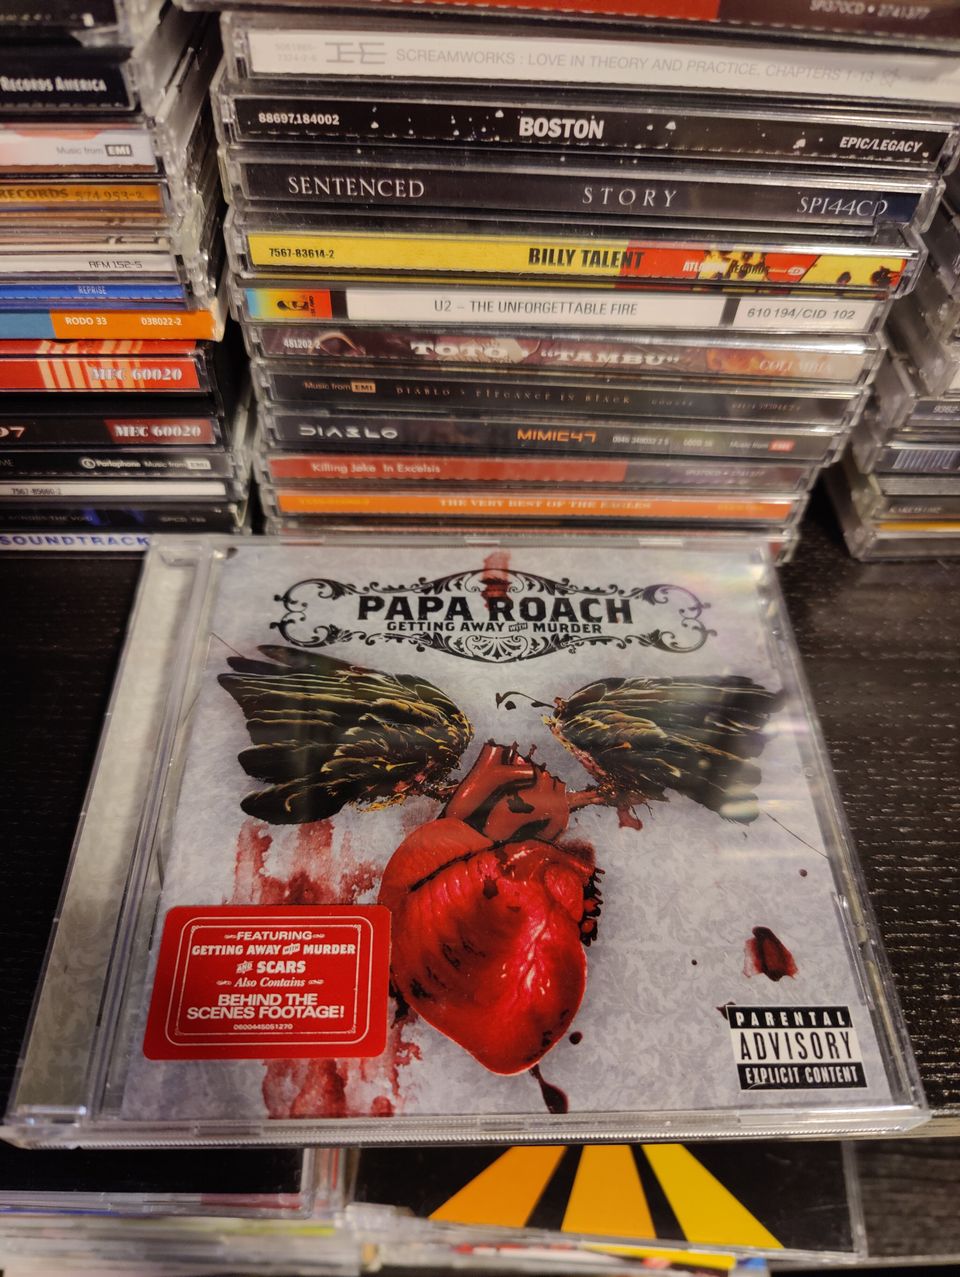 Papa roach getting away with murder CD